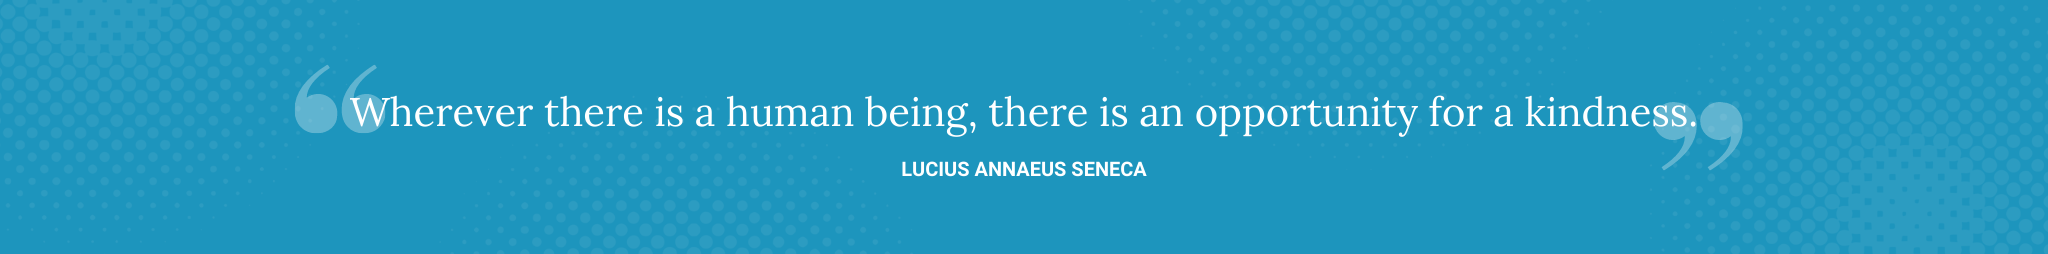 Lucius Annaeus Seneca Quote for 50 Customer Service Stats Quotes and Facts - Brittany Hodak